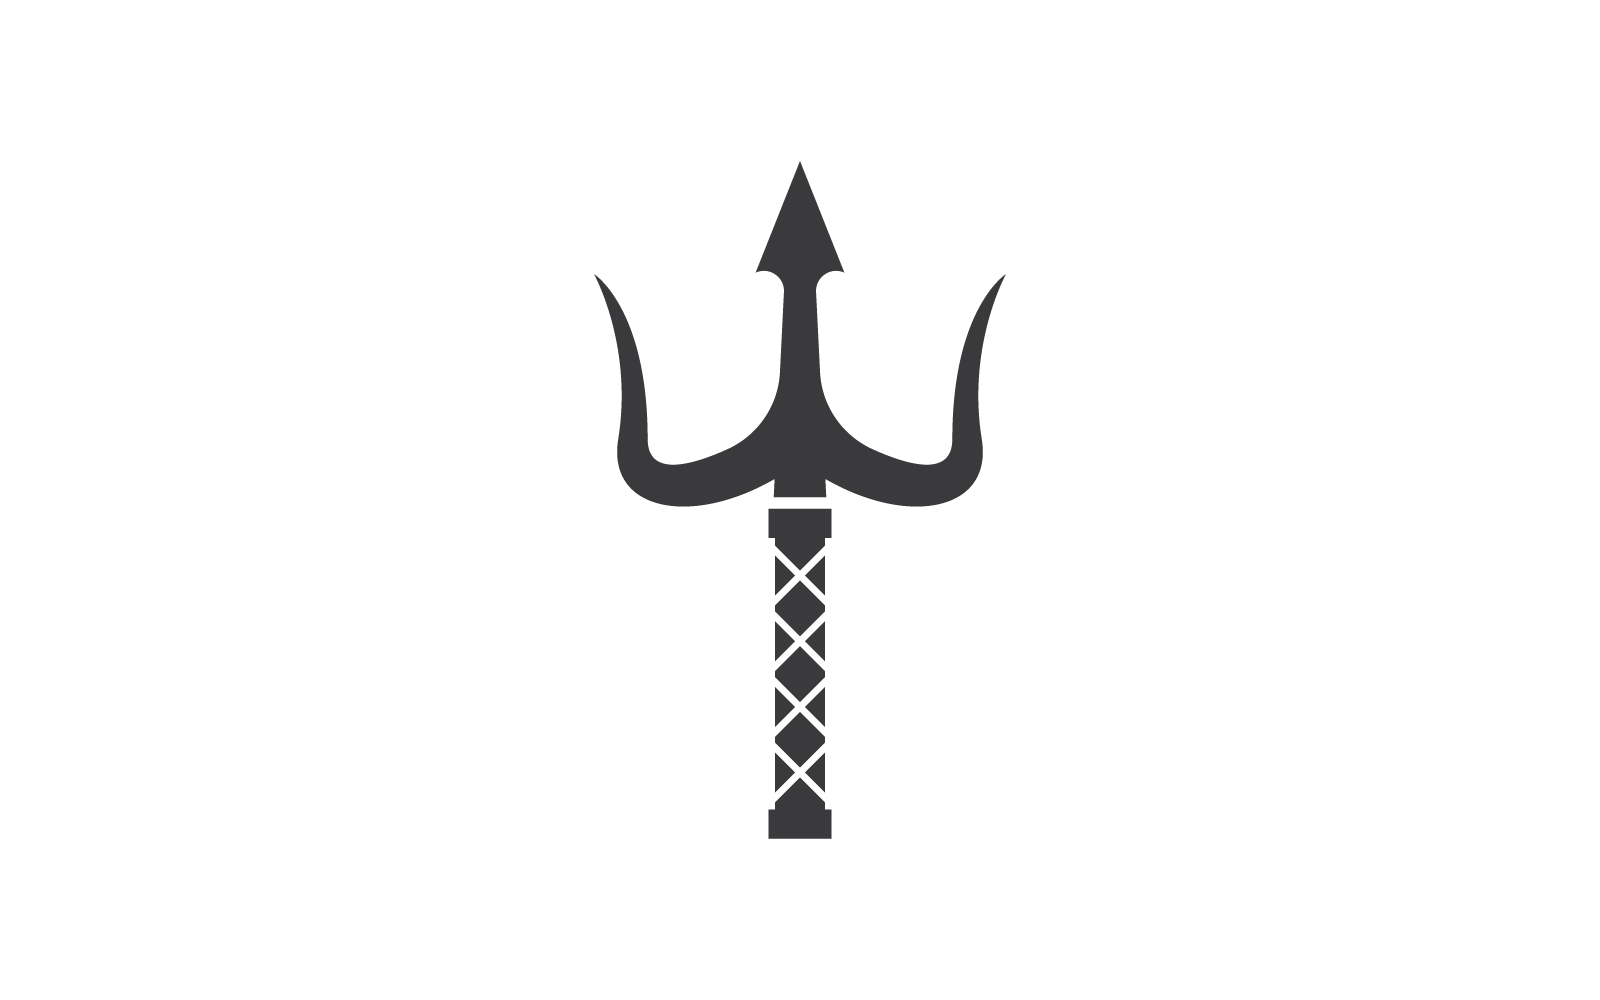 Trident and crown logo illustration flat design